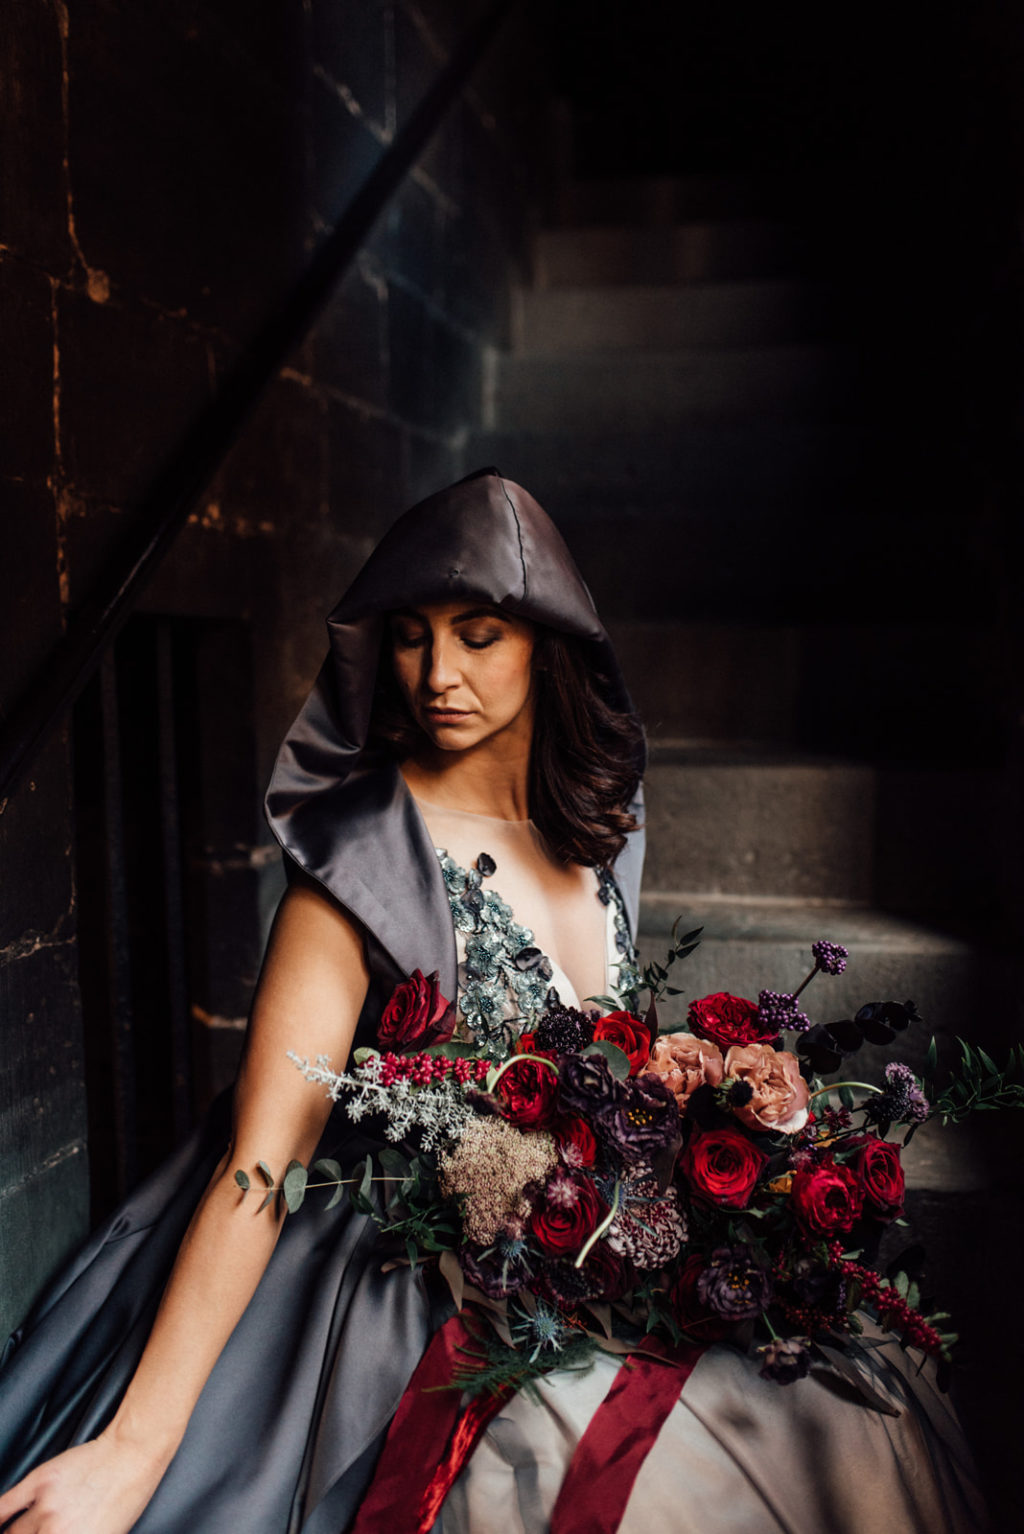 5 Hooded Wedding Dresses for An Alternative Bridal Look